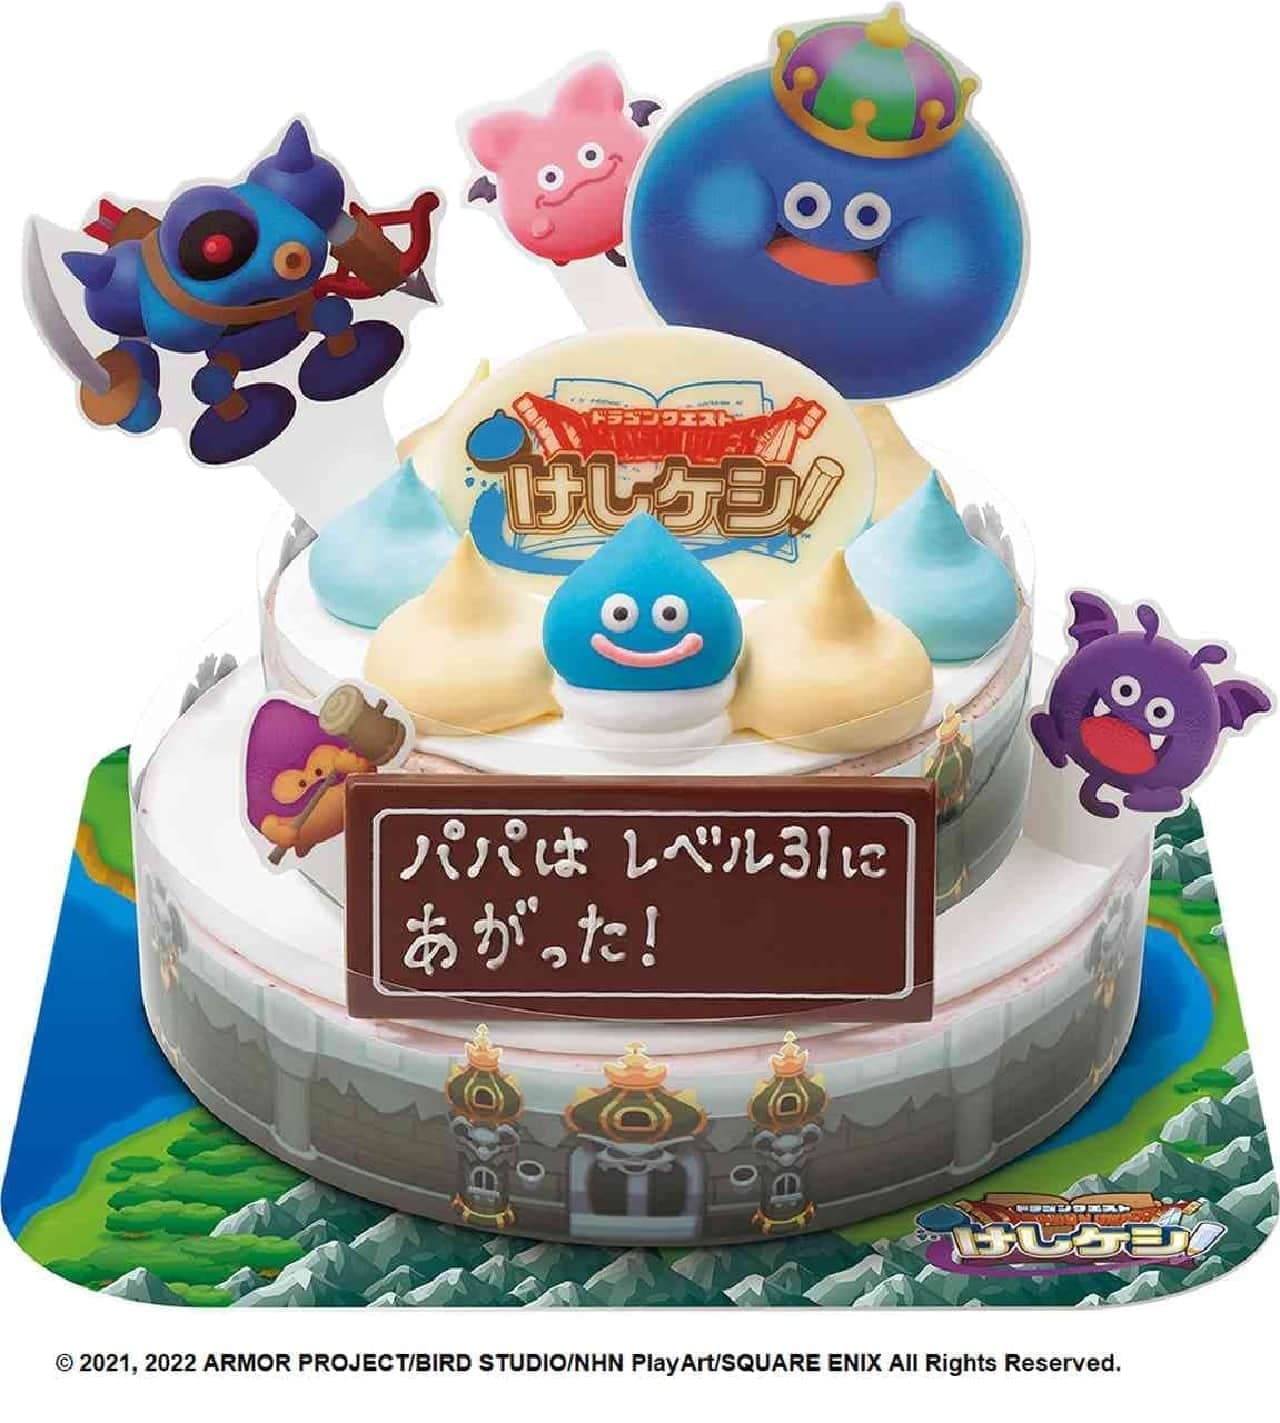 Thirty-One "Dragon Quest Keshi Keshi! Ice Cream Cake